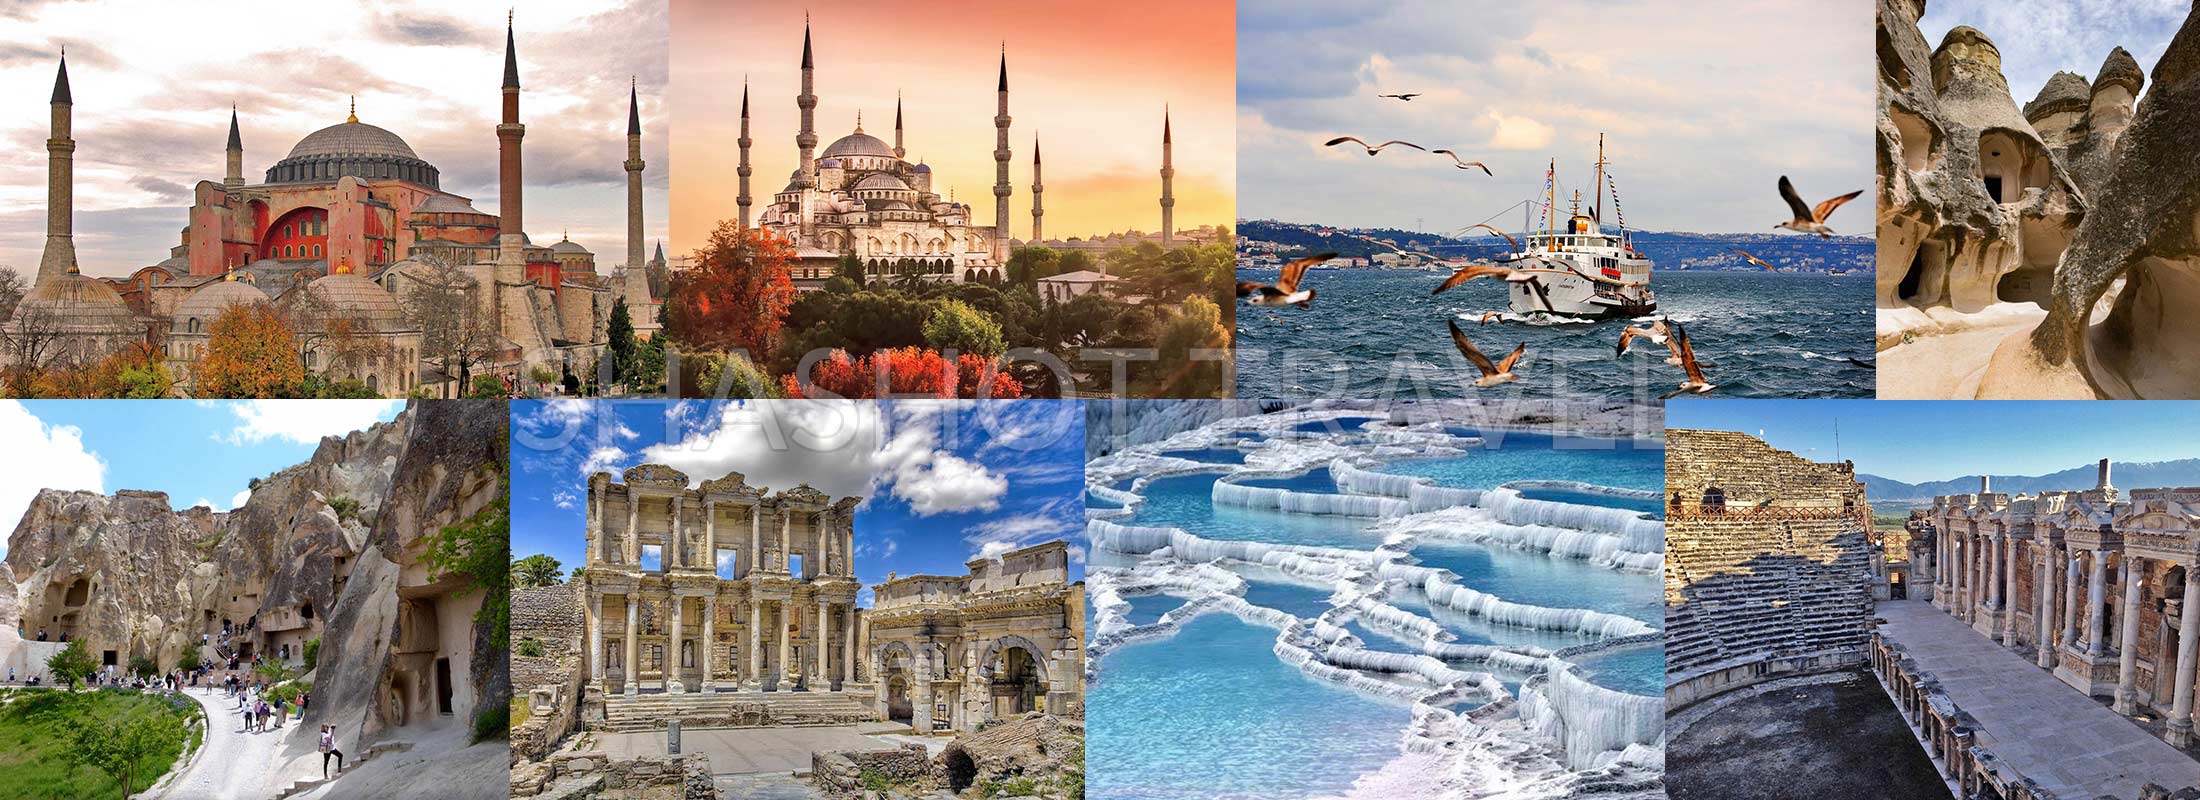 10-days-turkey-package-tours-istanbul-hagia-sophia-museum-blue-mosque-cappadocia-virgin-mary-house-ephesus-pamukkale-hierapolis